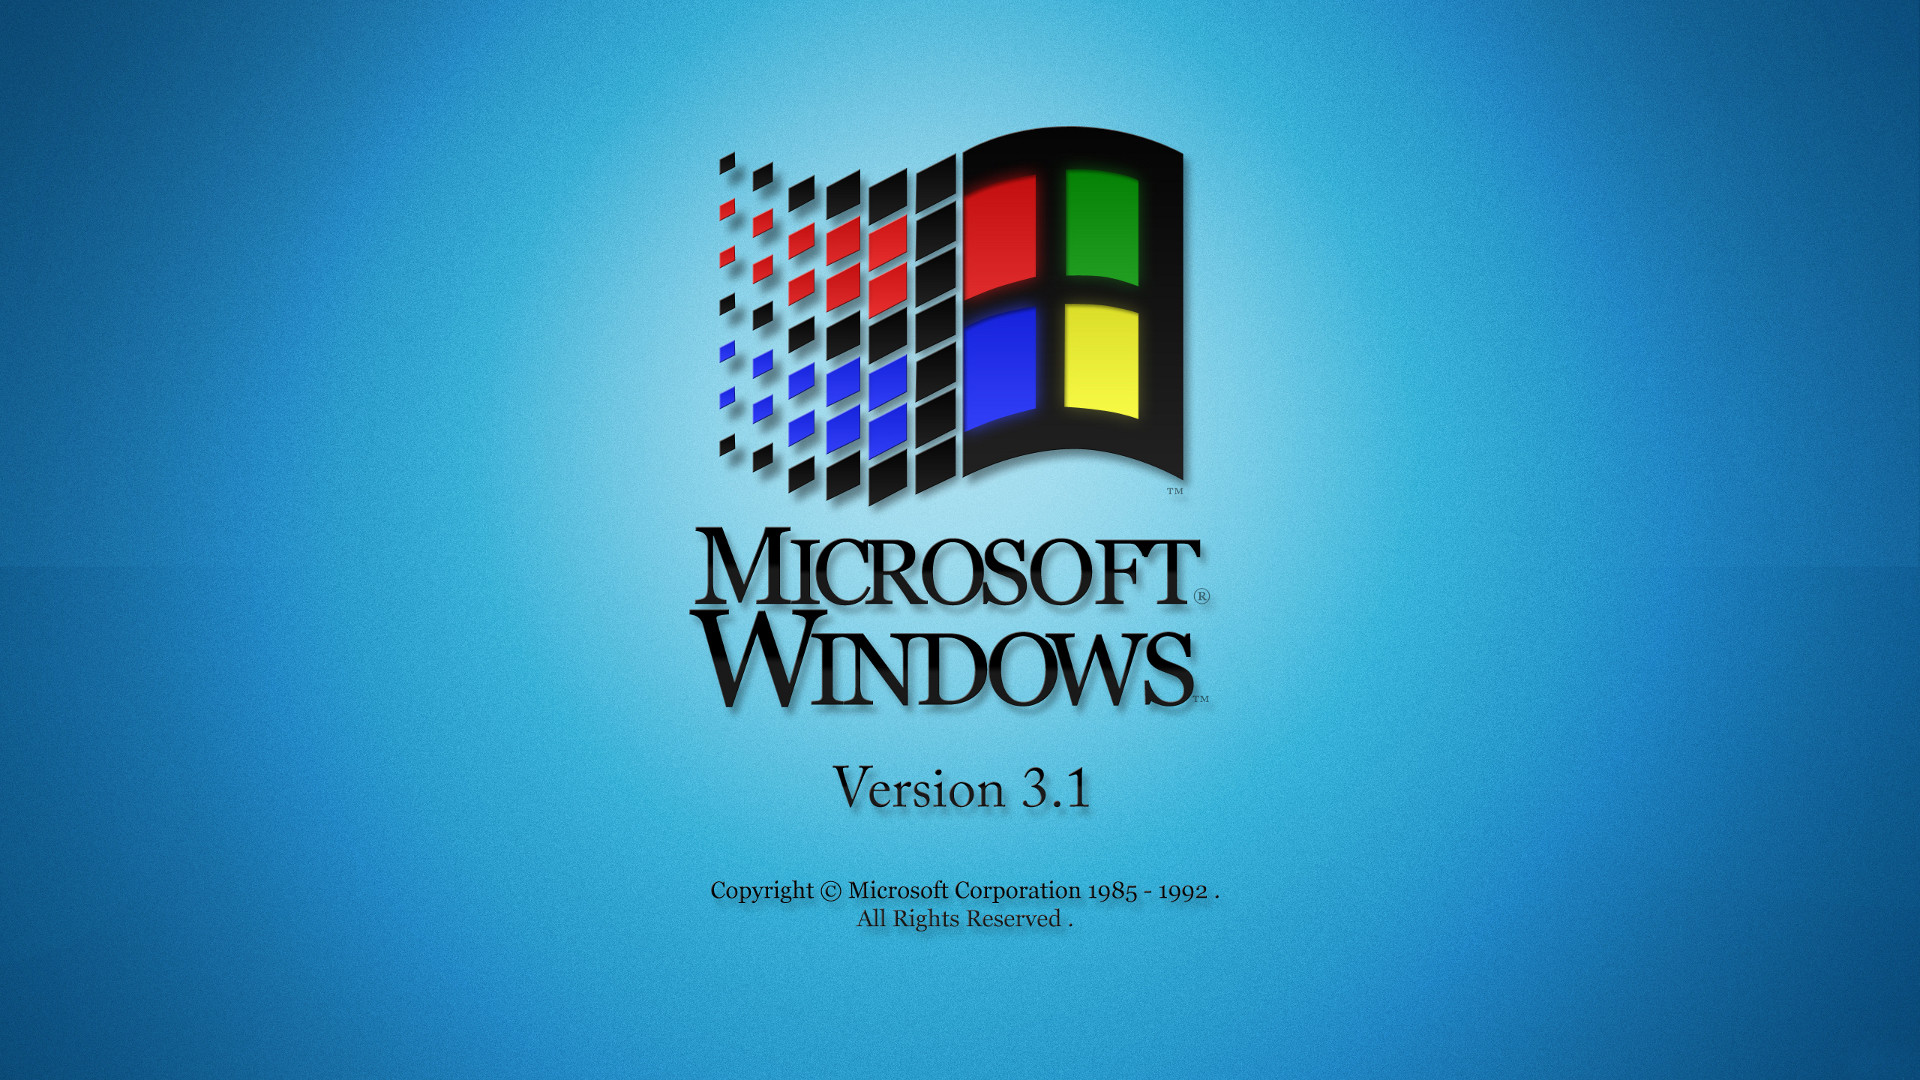 1920x1080  Microsoft Windows Version 3.1 desktop PC and Mac wallpaper